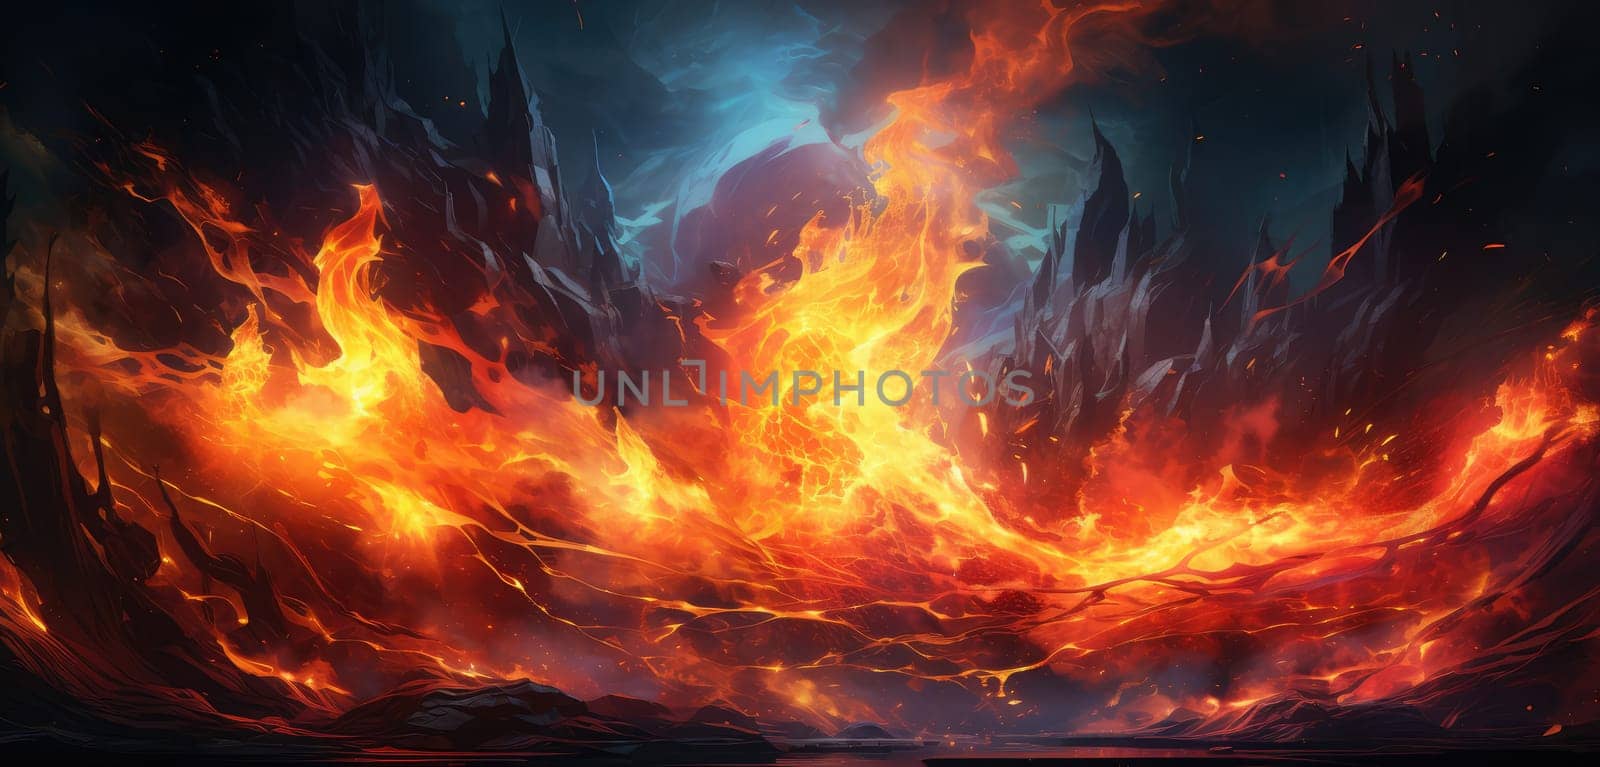 Fiery flame with dark background by palinchak